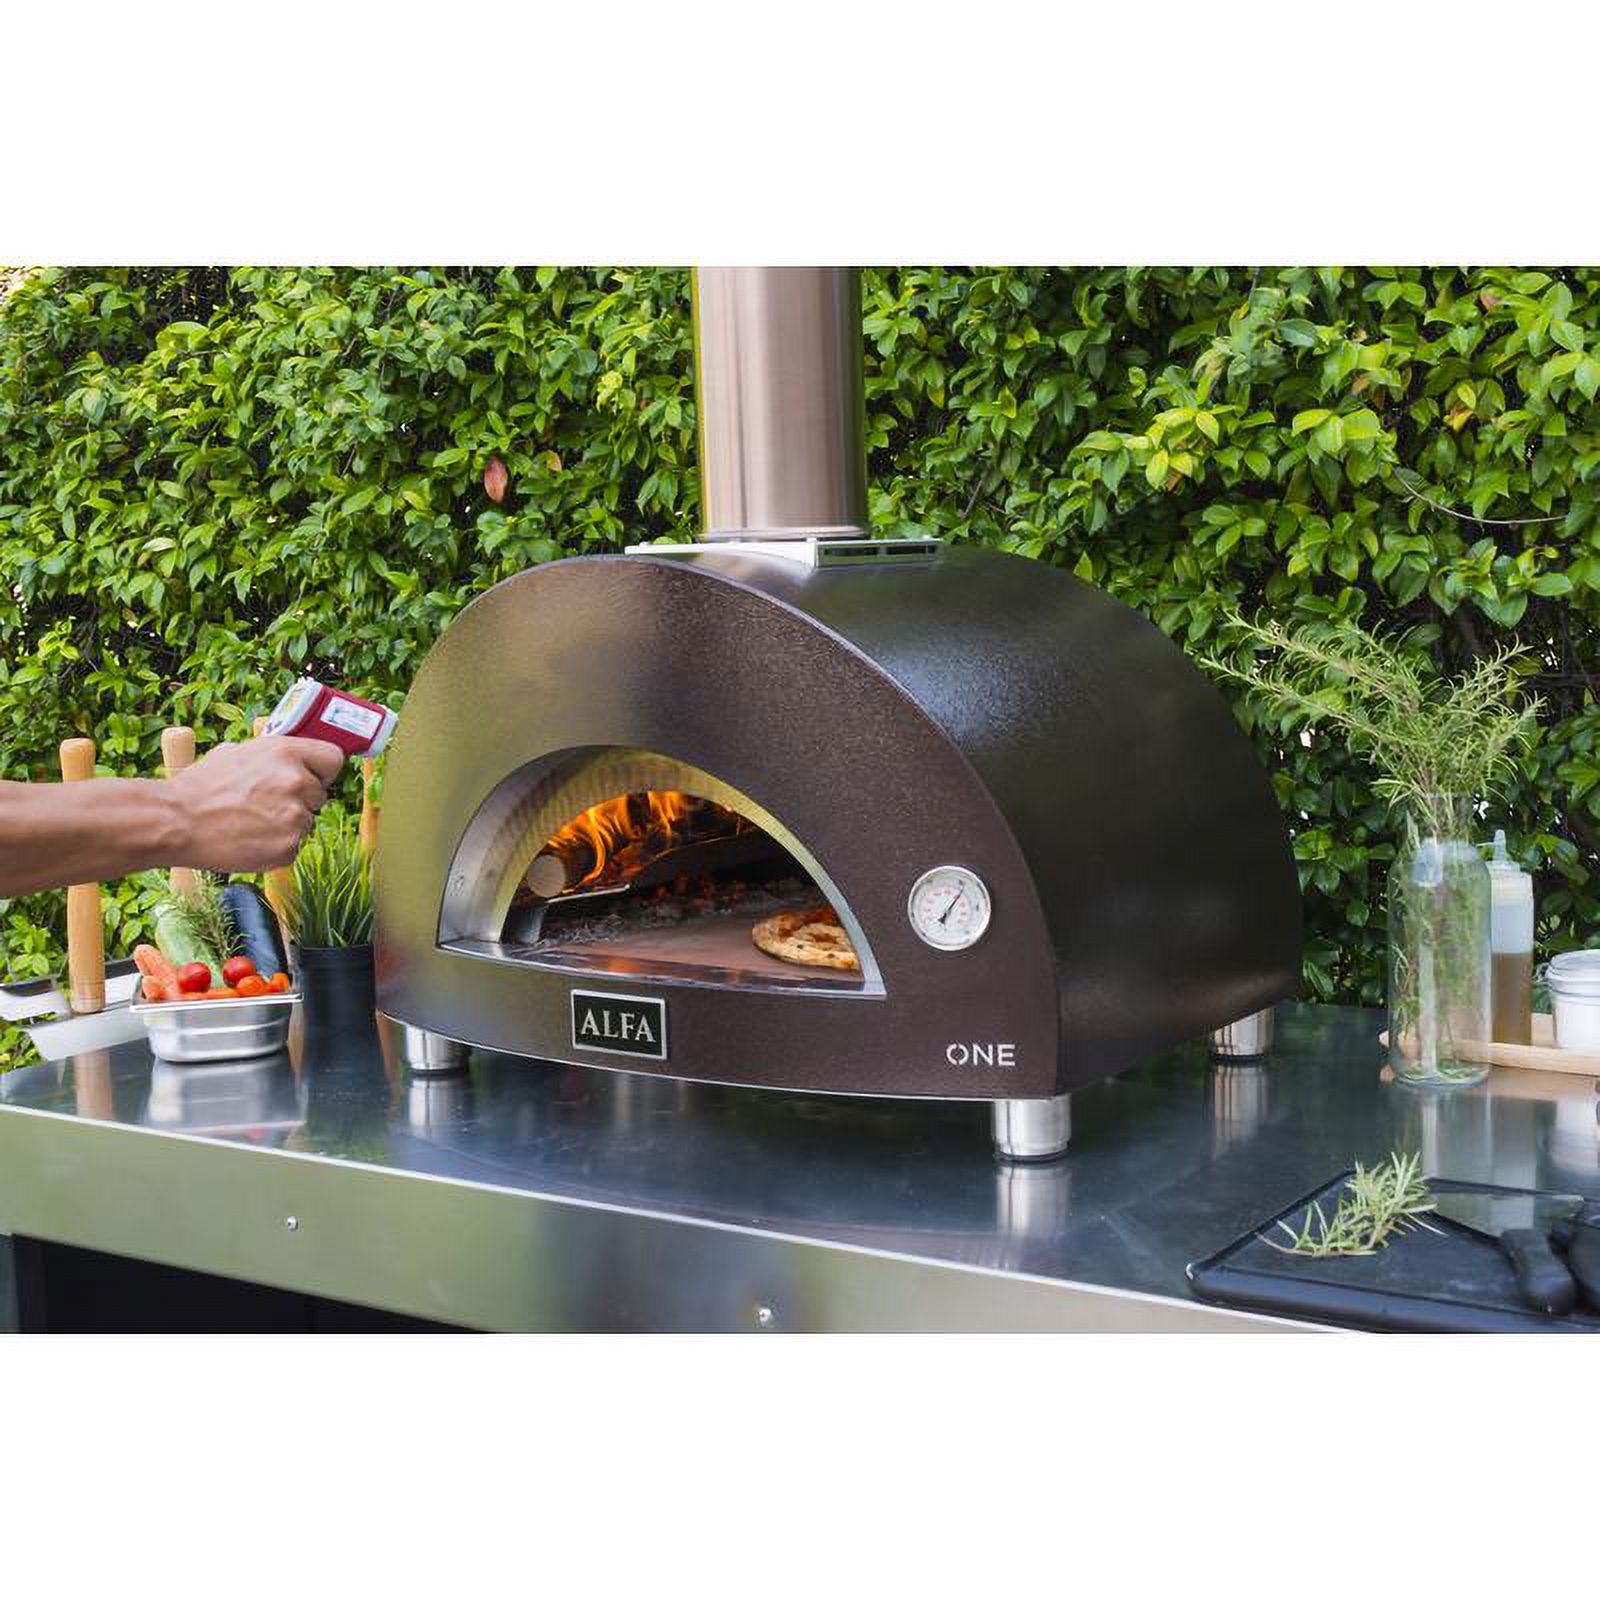 Alfa Nano 29 in. Wood Outdoor Pizza Oven Copper - image 2 of 3